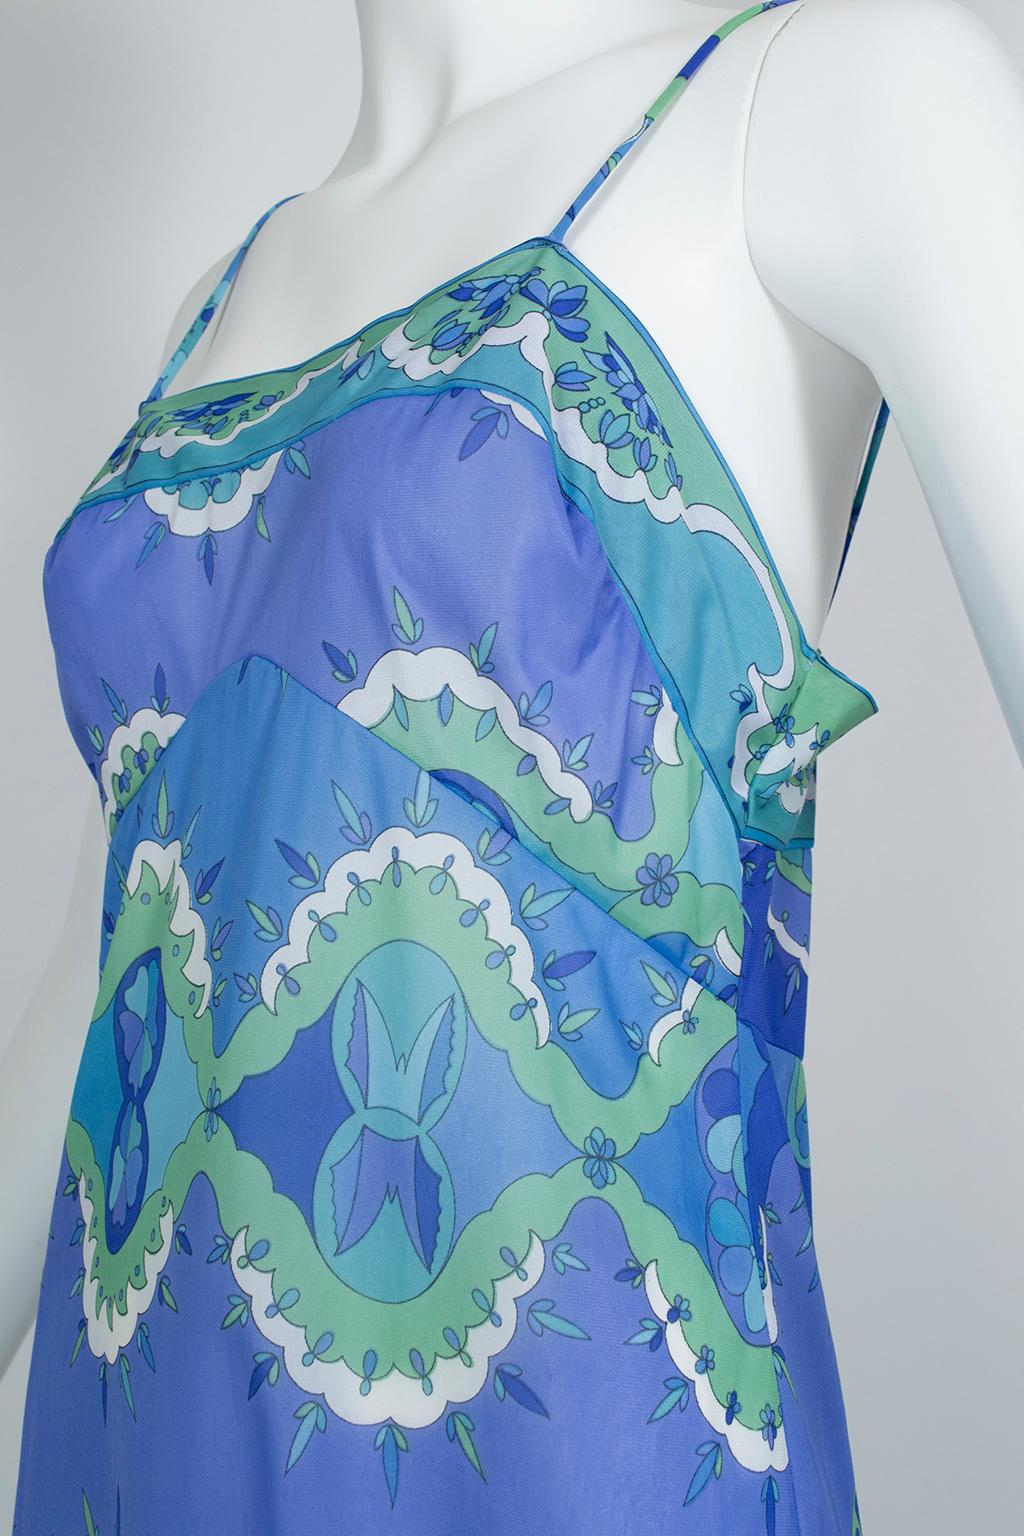 Emilio Pucci Formfit Rogers Blue Palette Negligée Slip Mini Dress - Small, 1960s 1